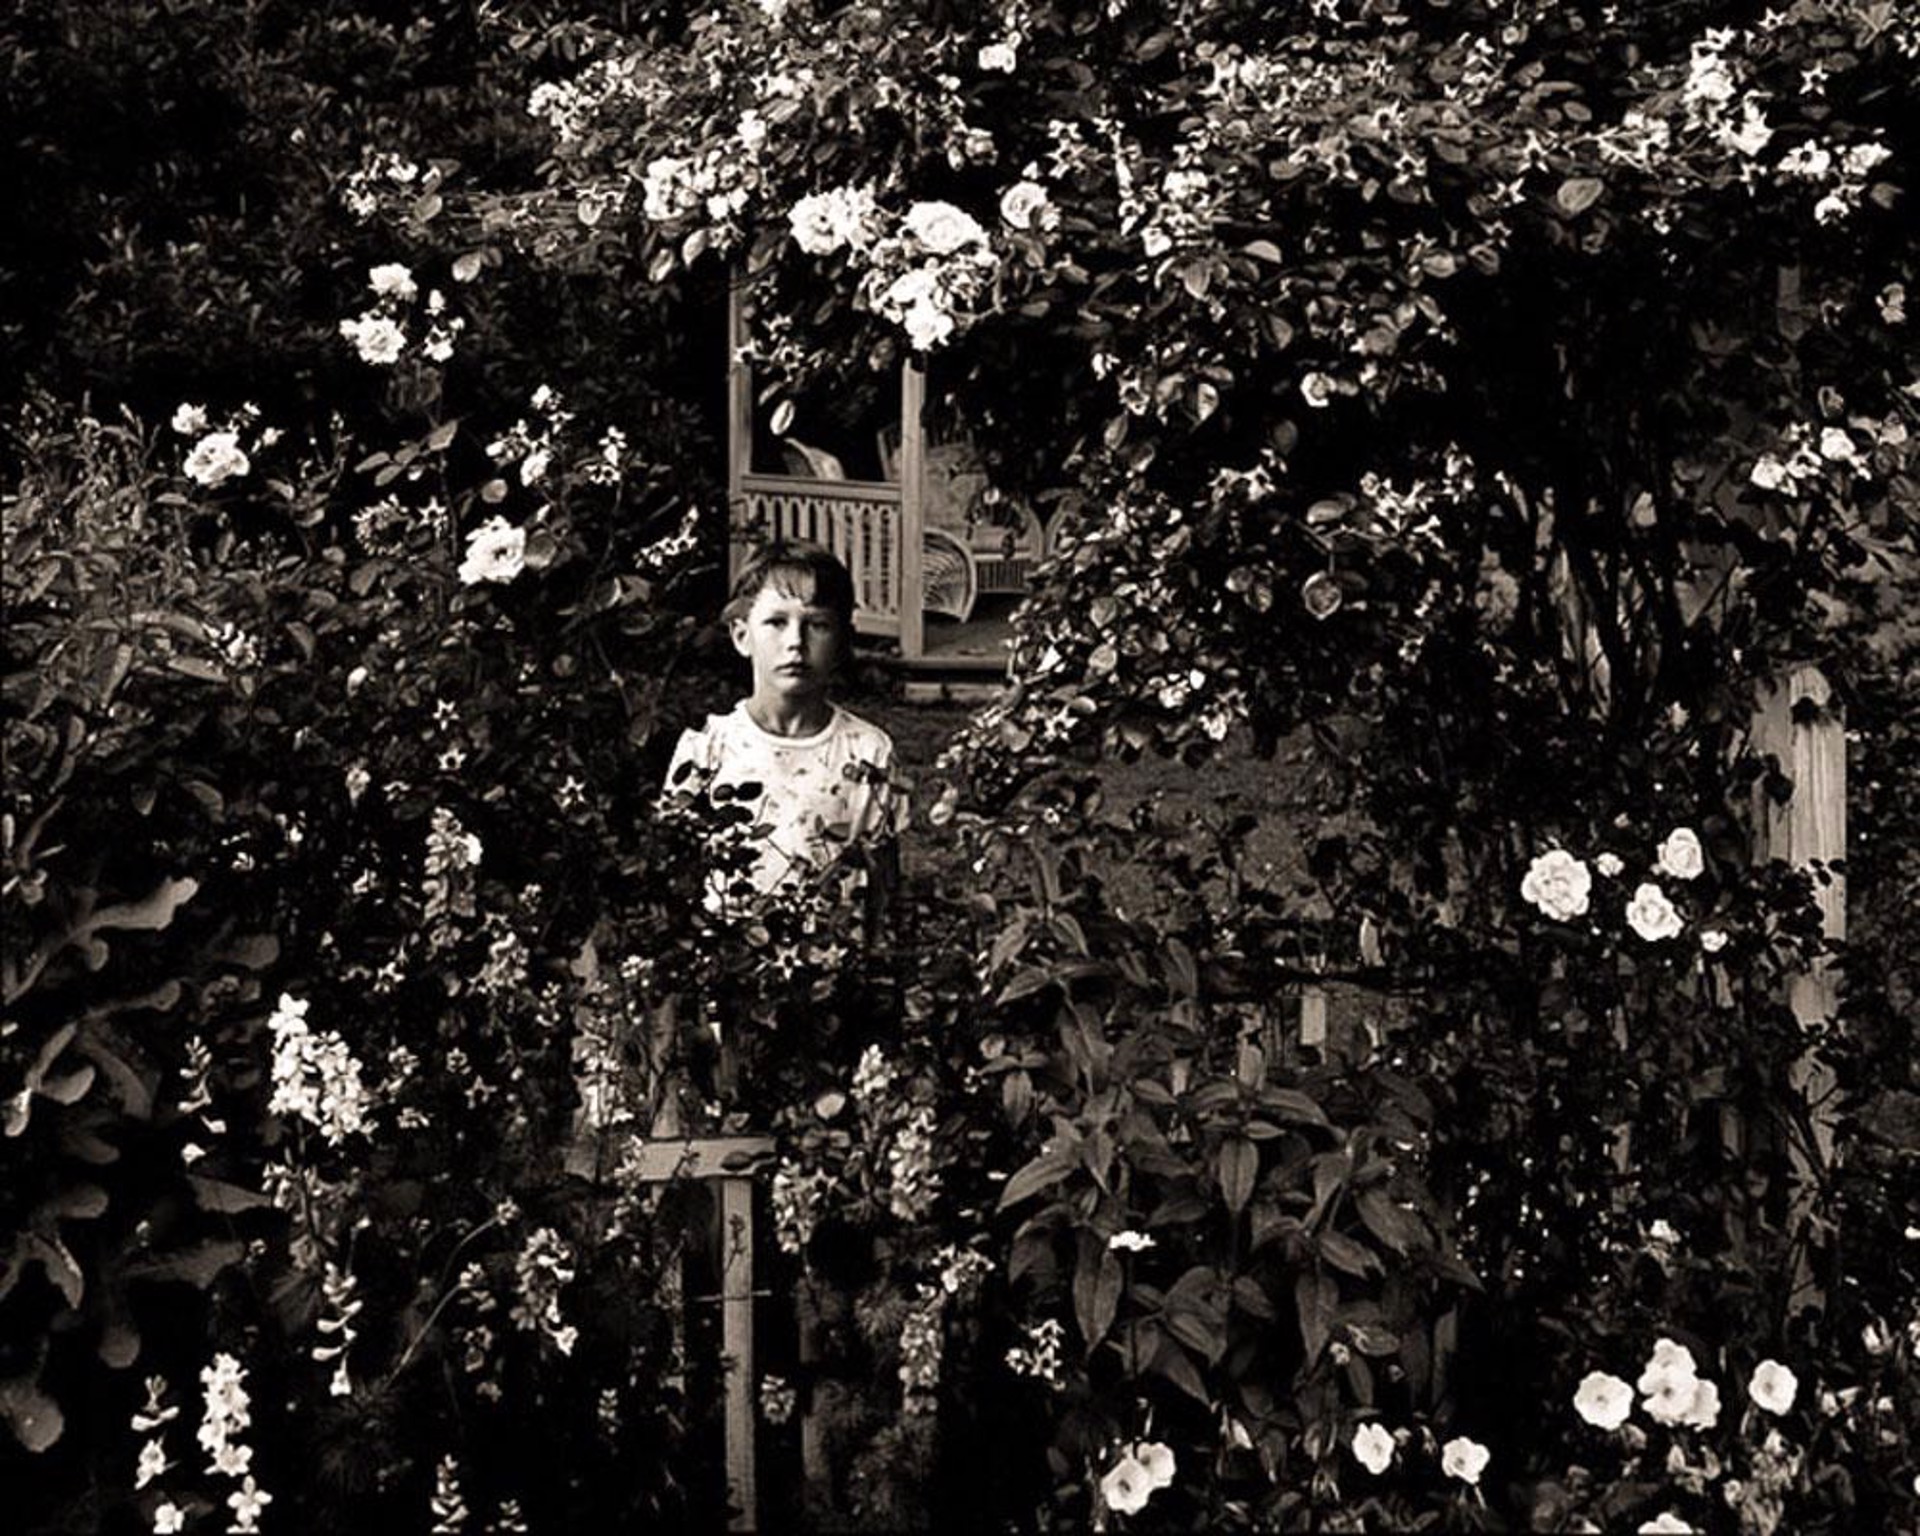 (#041) Wylie in the Garden by Frank Hunter